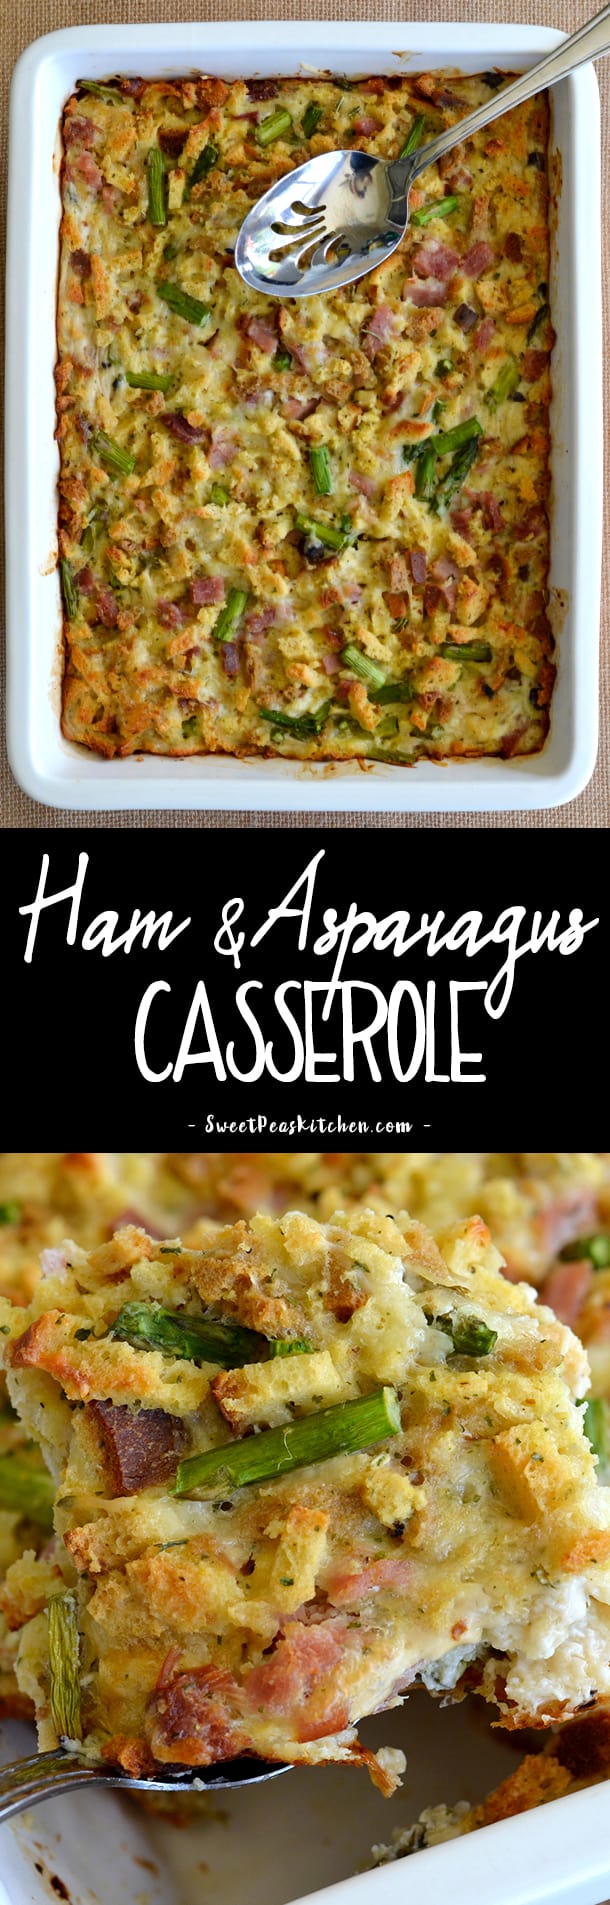 Ham & Asparagus Casserole